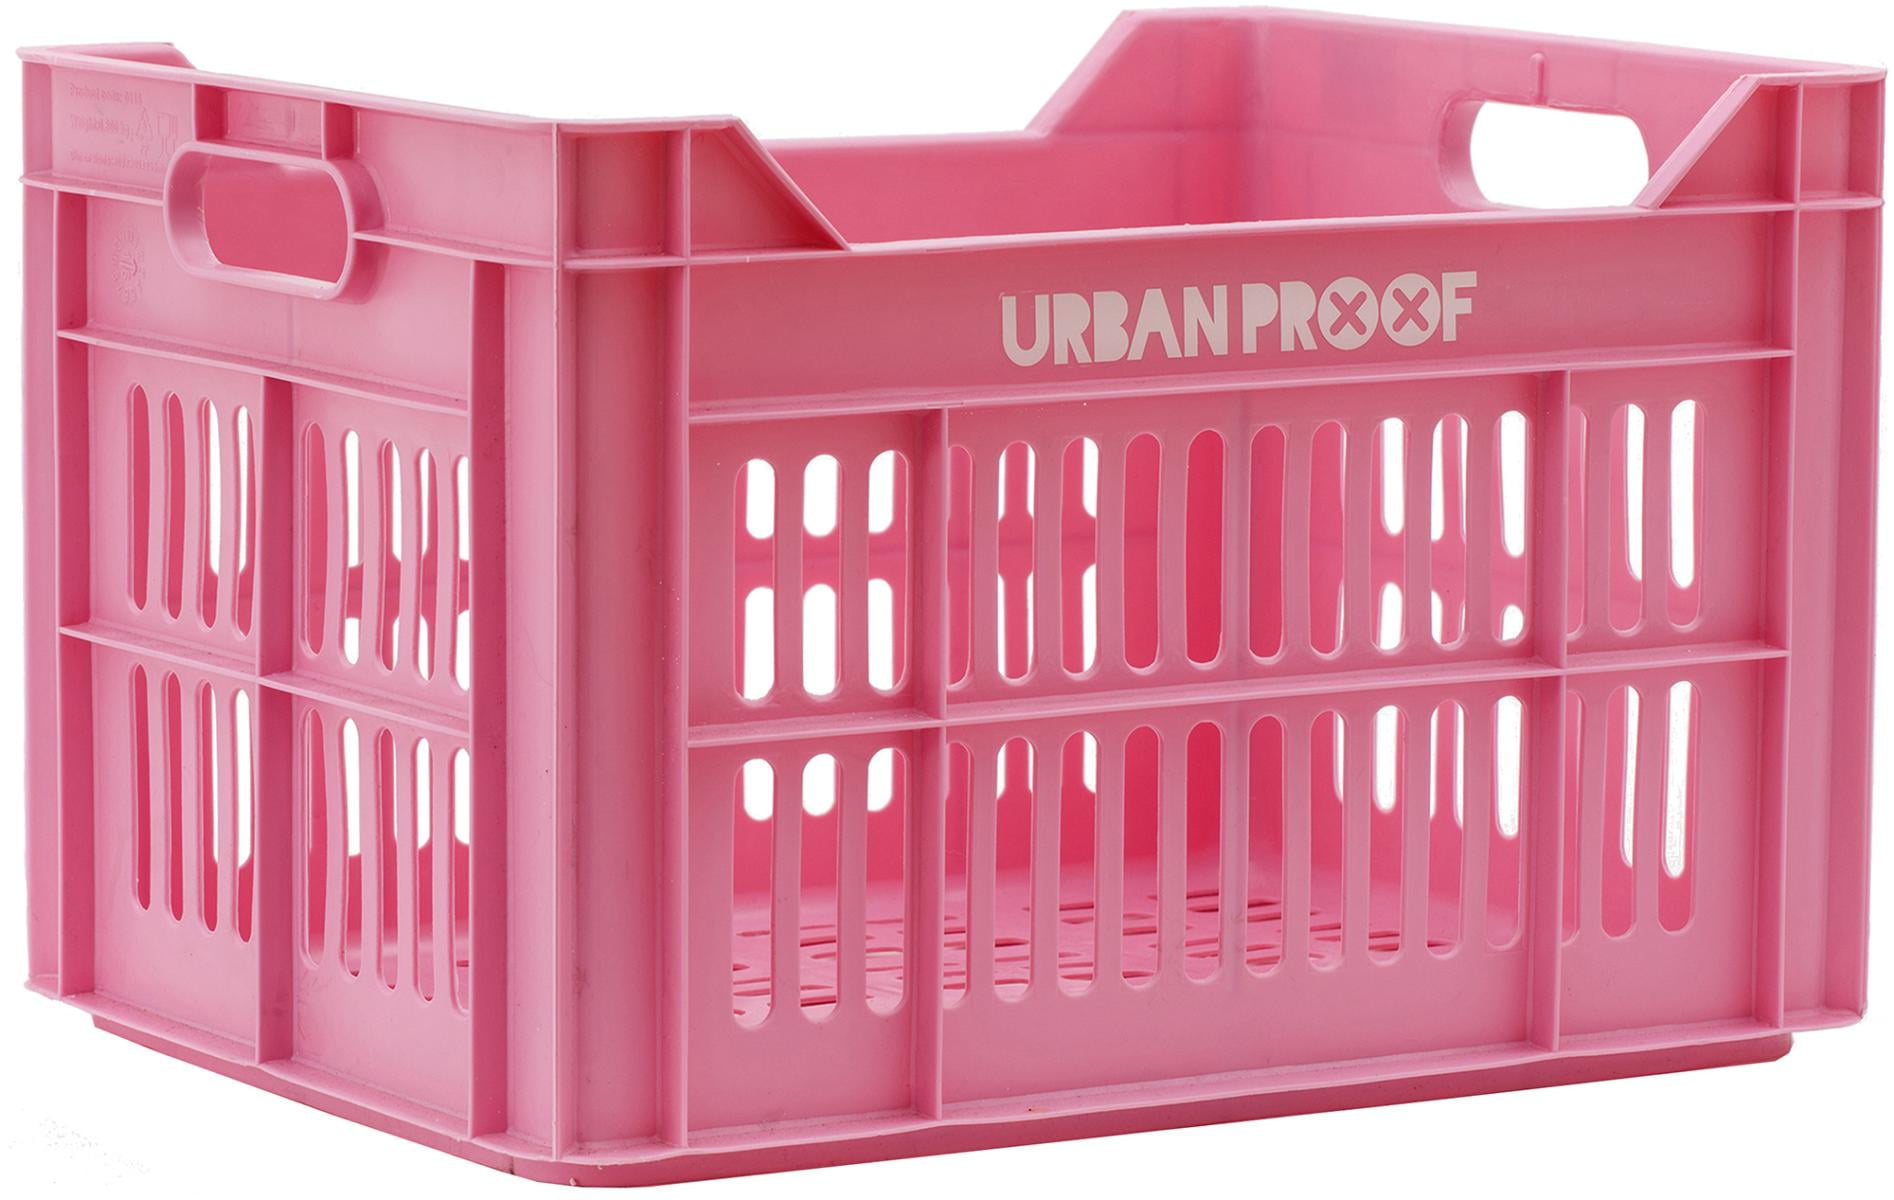 kleur regenval mineraal Urban Proof Bicycle Crate, Pink - Walmart.com